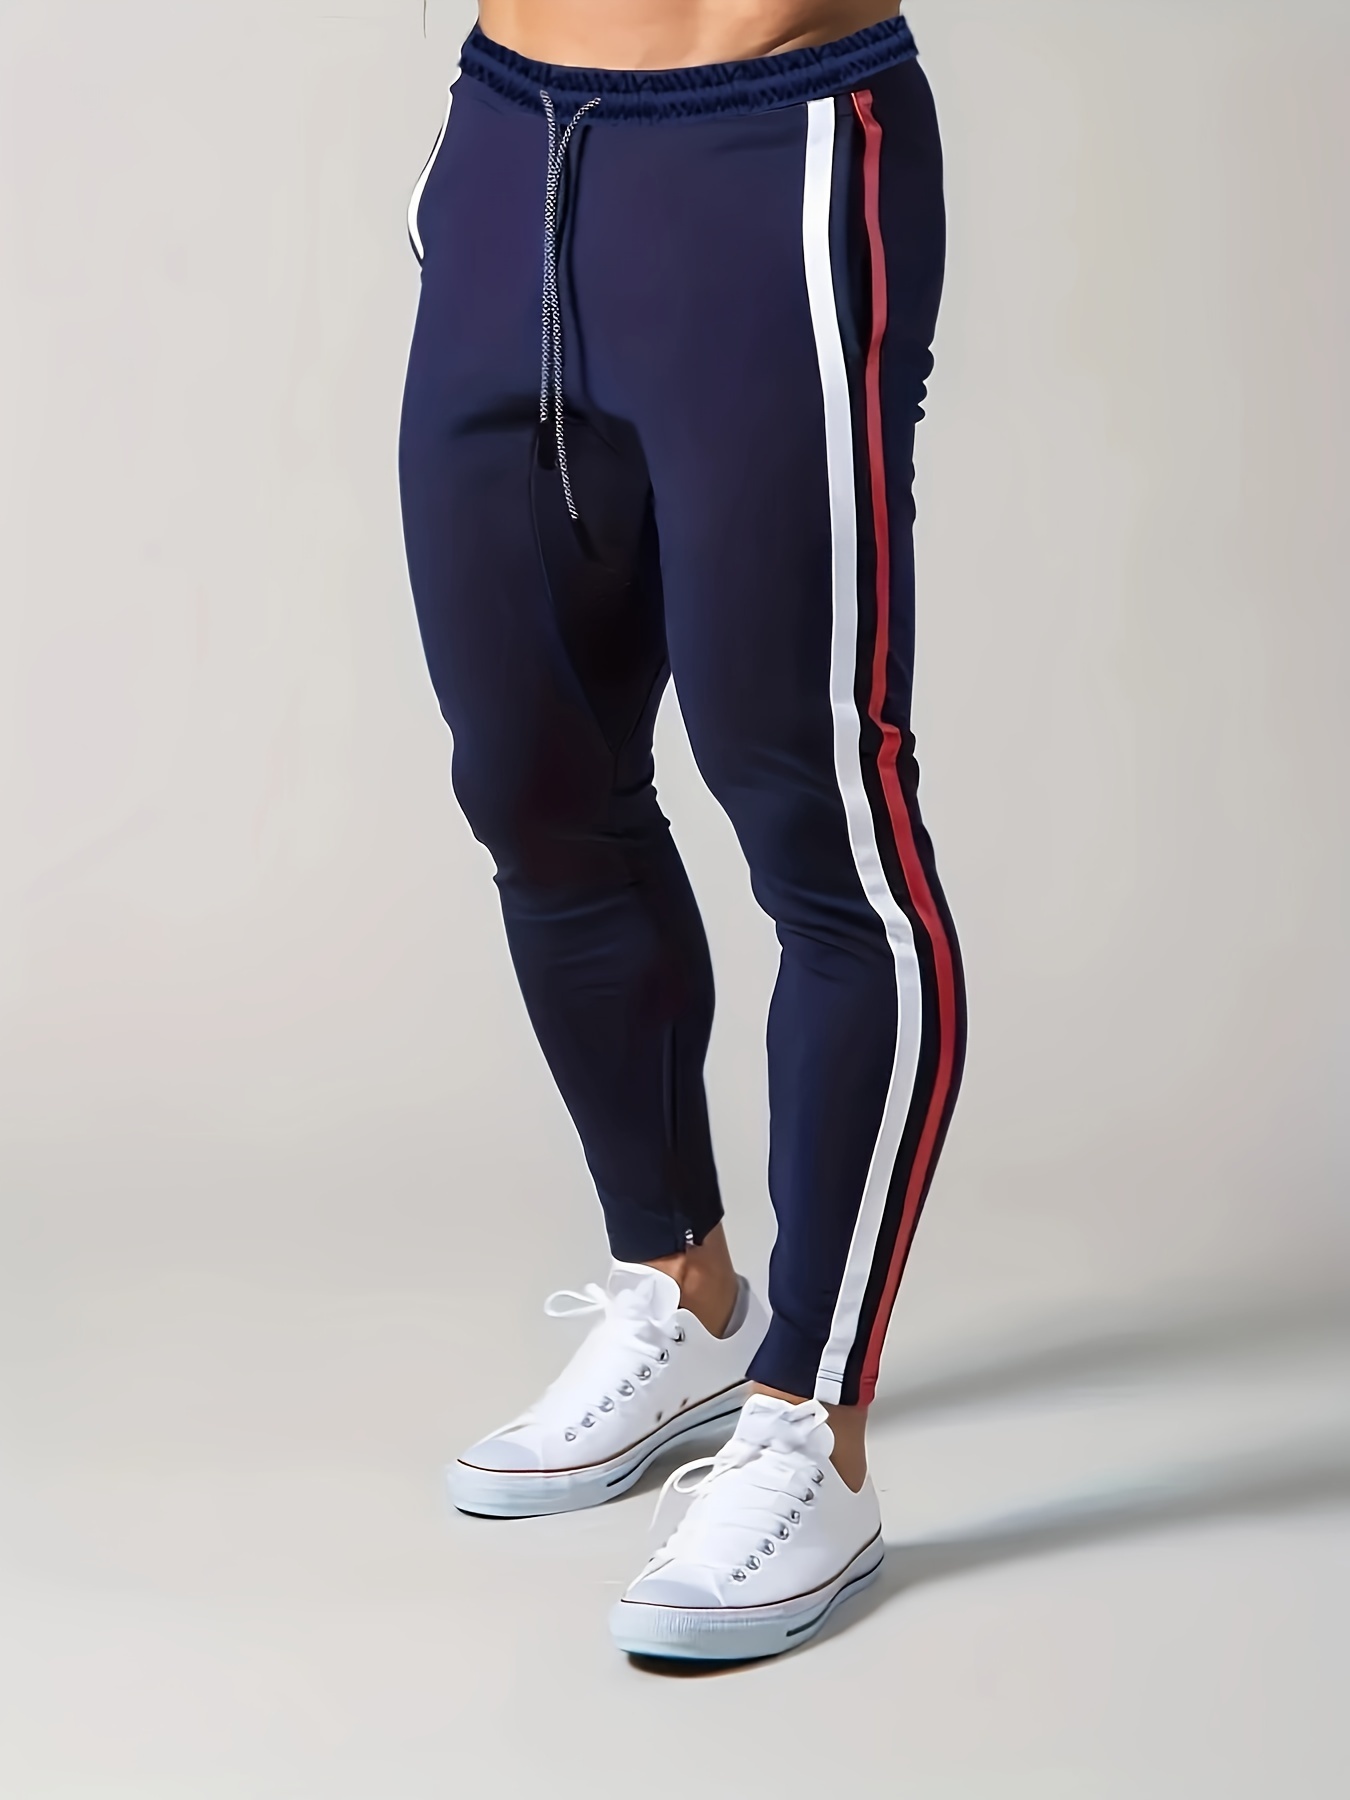 Women's Running Leggings Sweatpants Quick Dry Exercise Pants